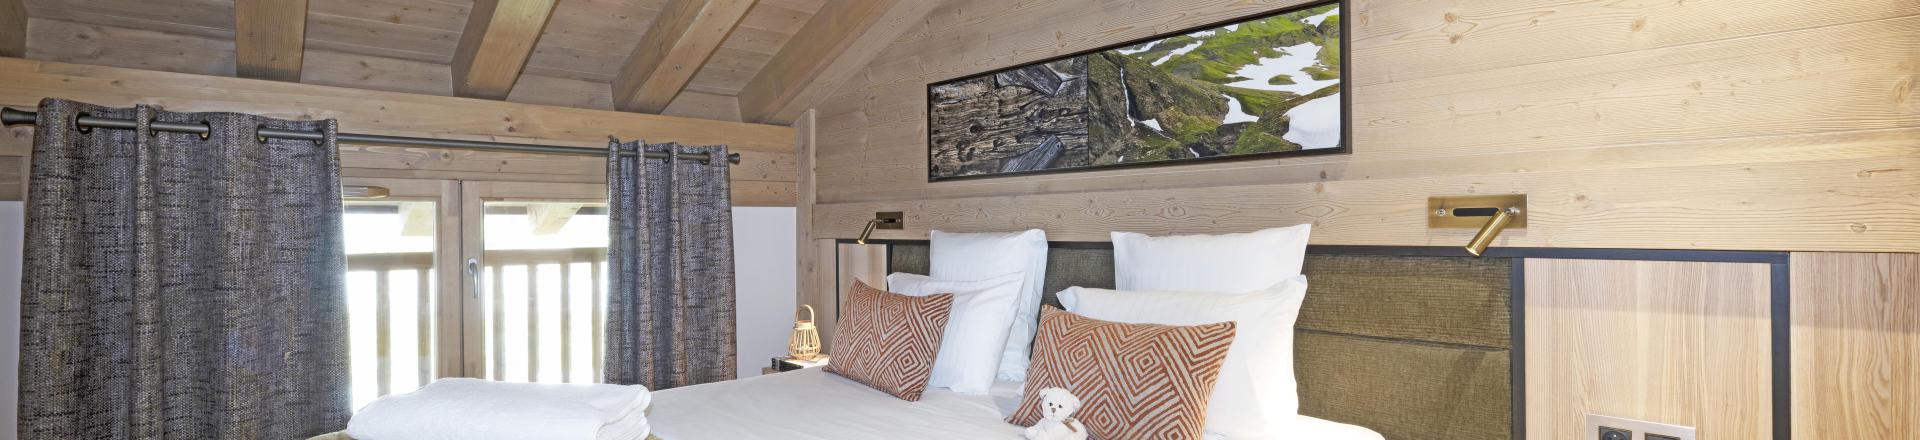 Rent in ski resort 5 room apartment 10 people - Résidence Alpen Lodge - La Rosière - Bedroom